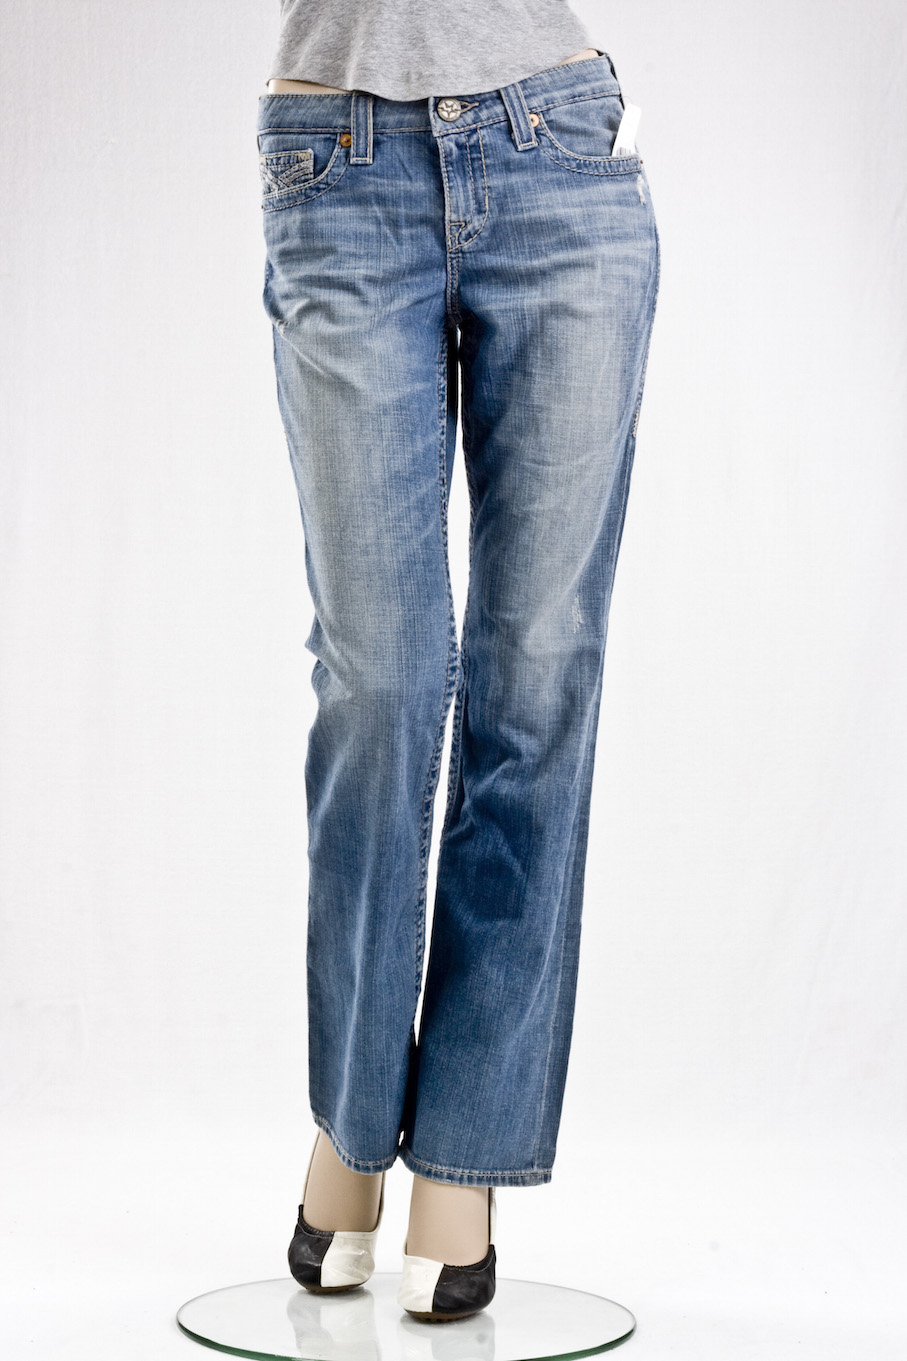 Женские джинсы Big Star "Буткат" Maddie Boot интернет-магазин Fashion Jeans